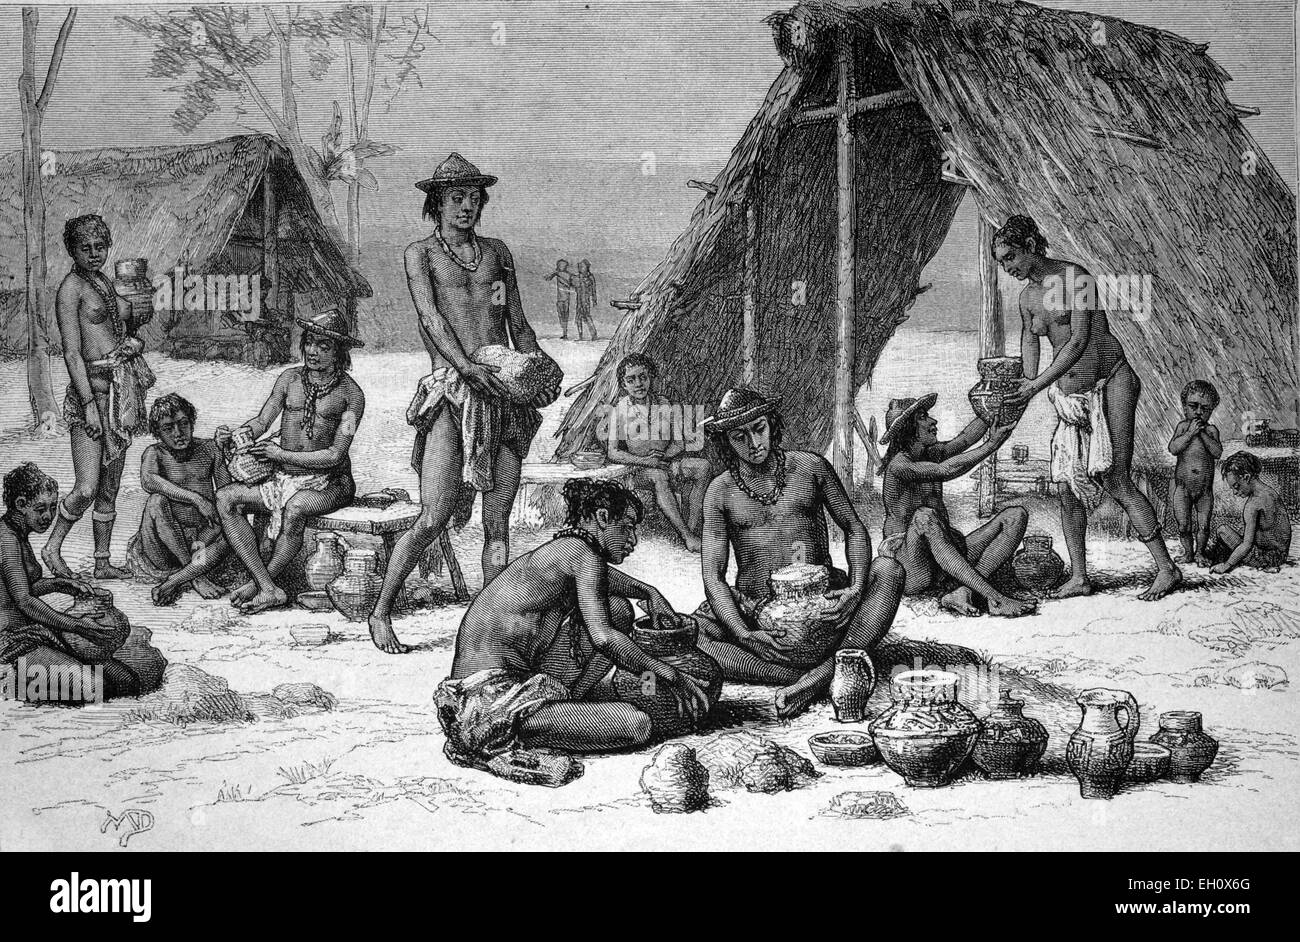 Galibi Indians making pottery, South America, historical illustration, circa 1886 Stock Photo